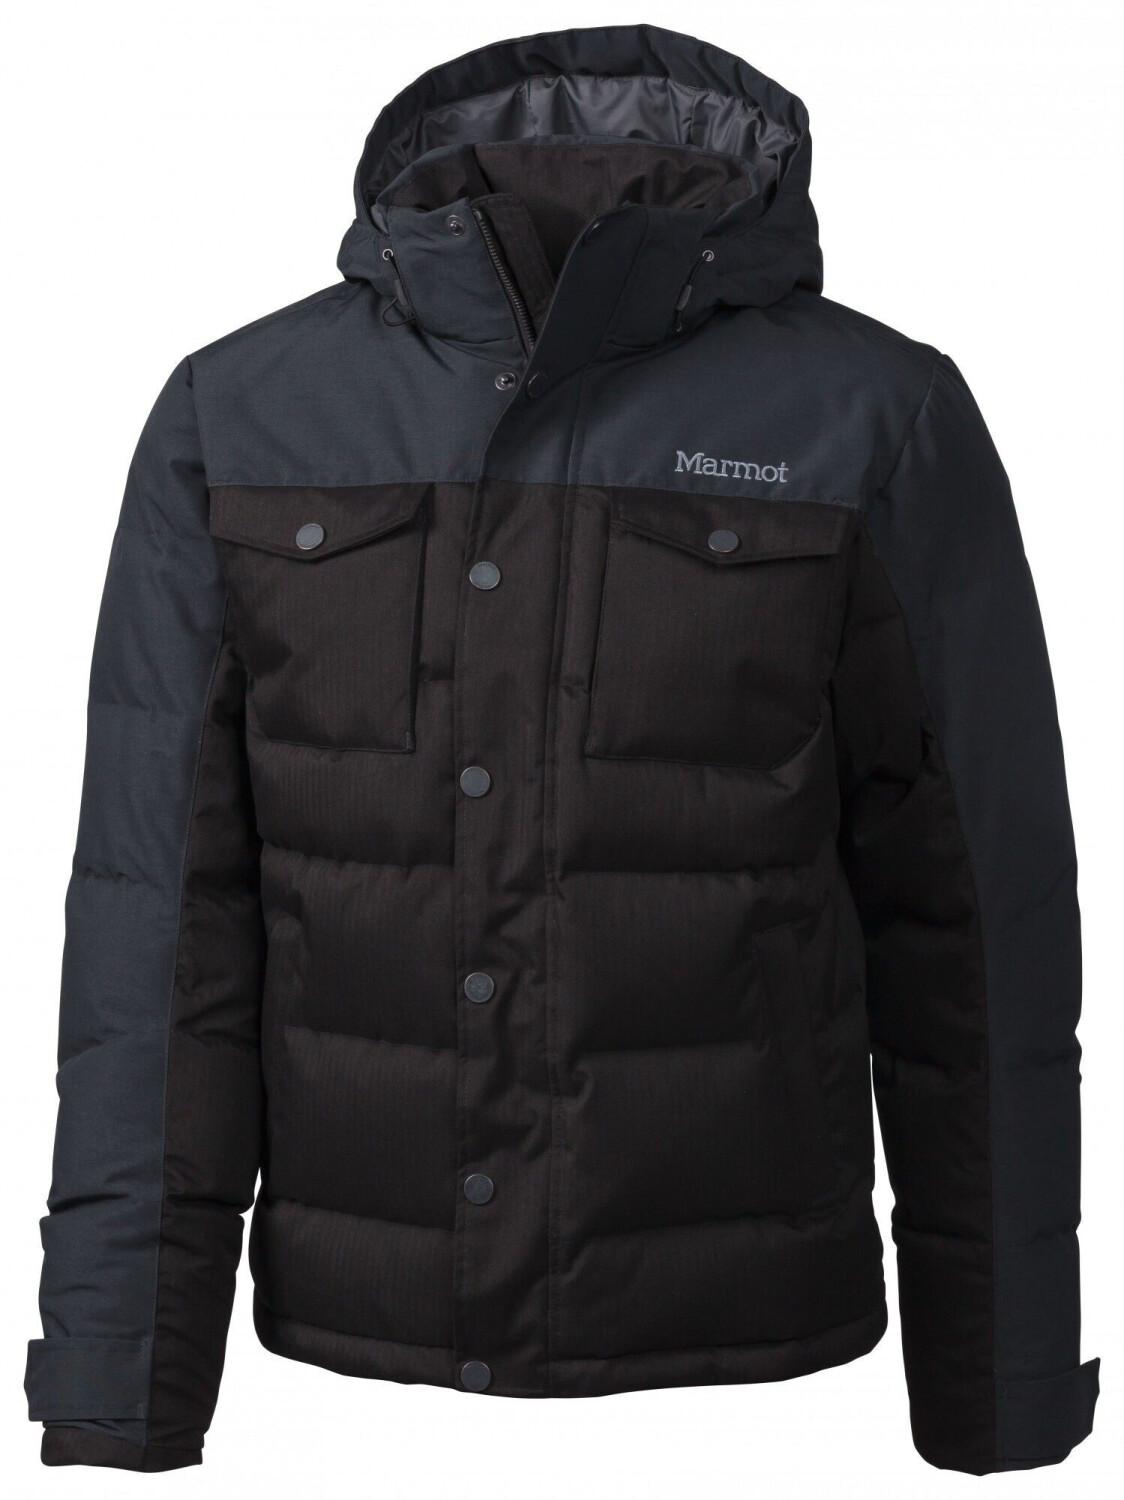 Buy Marmot Fordham Jacket from Â£139.99 (Today) â Best Deals on idealo.co.uk